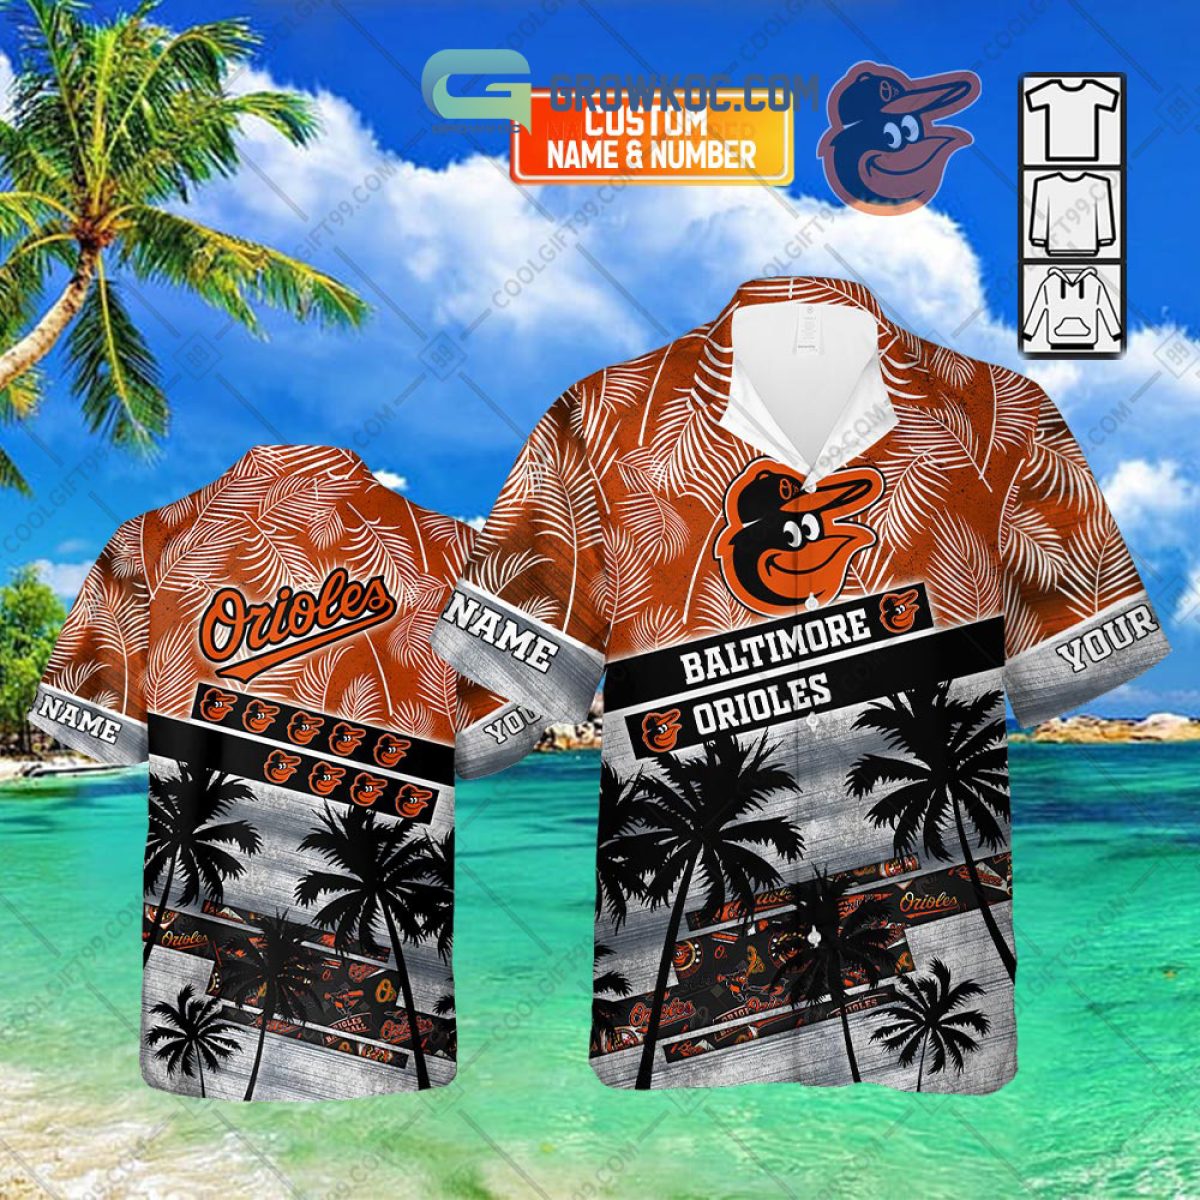 Baltimore Orioles Love Team Personalized Orange Design Baseball Jersey -  Growkoc